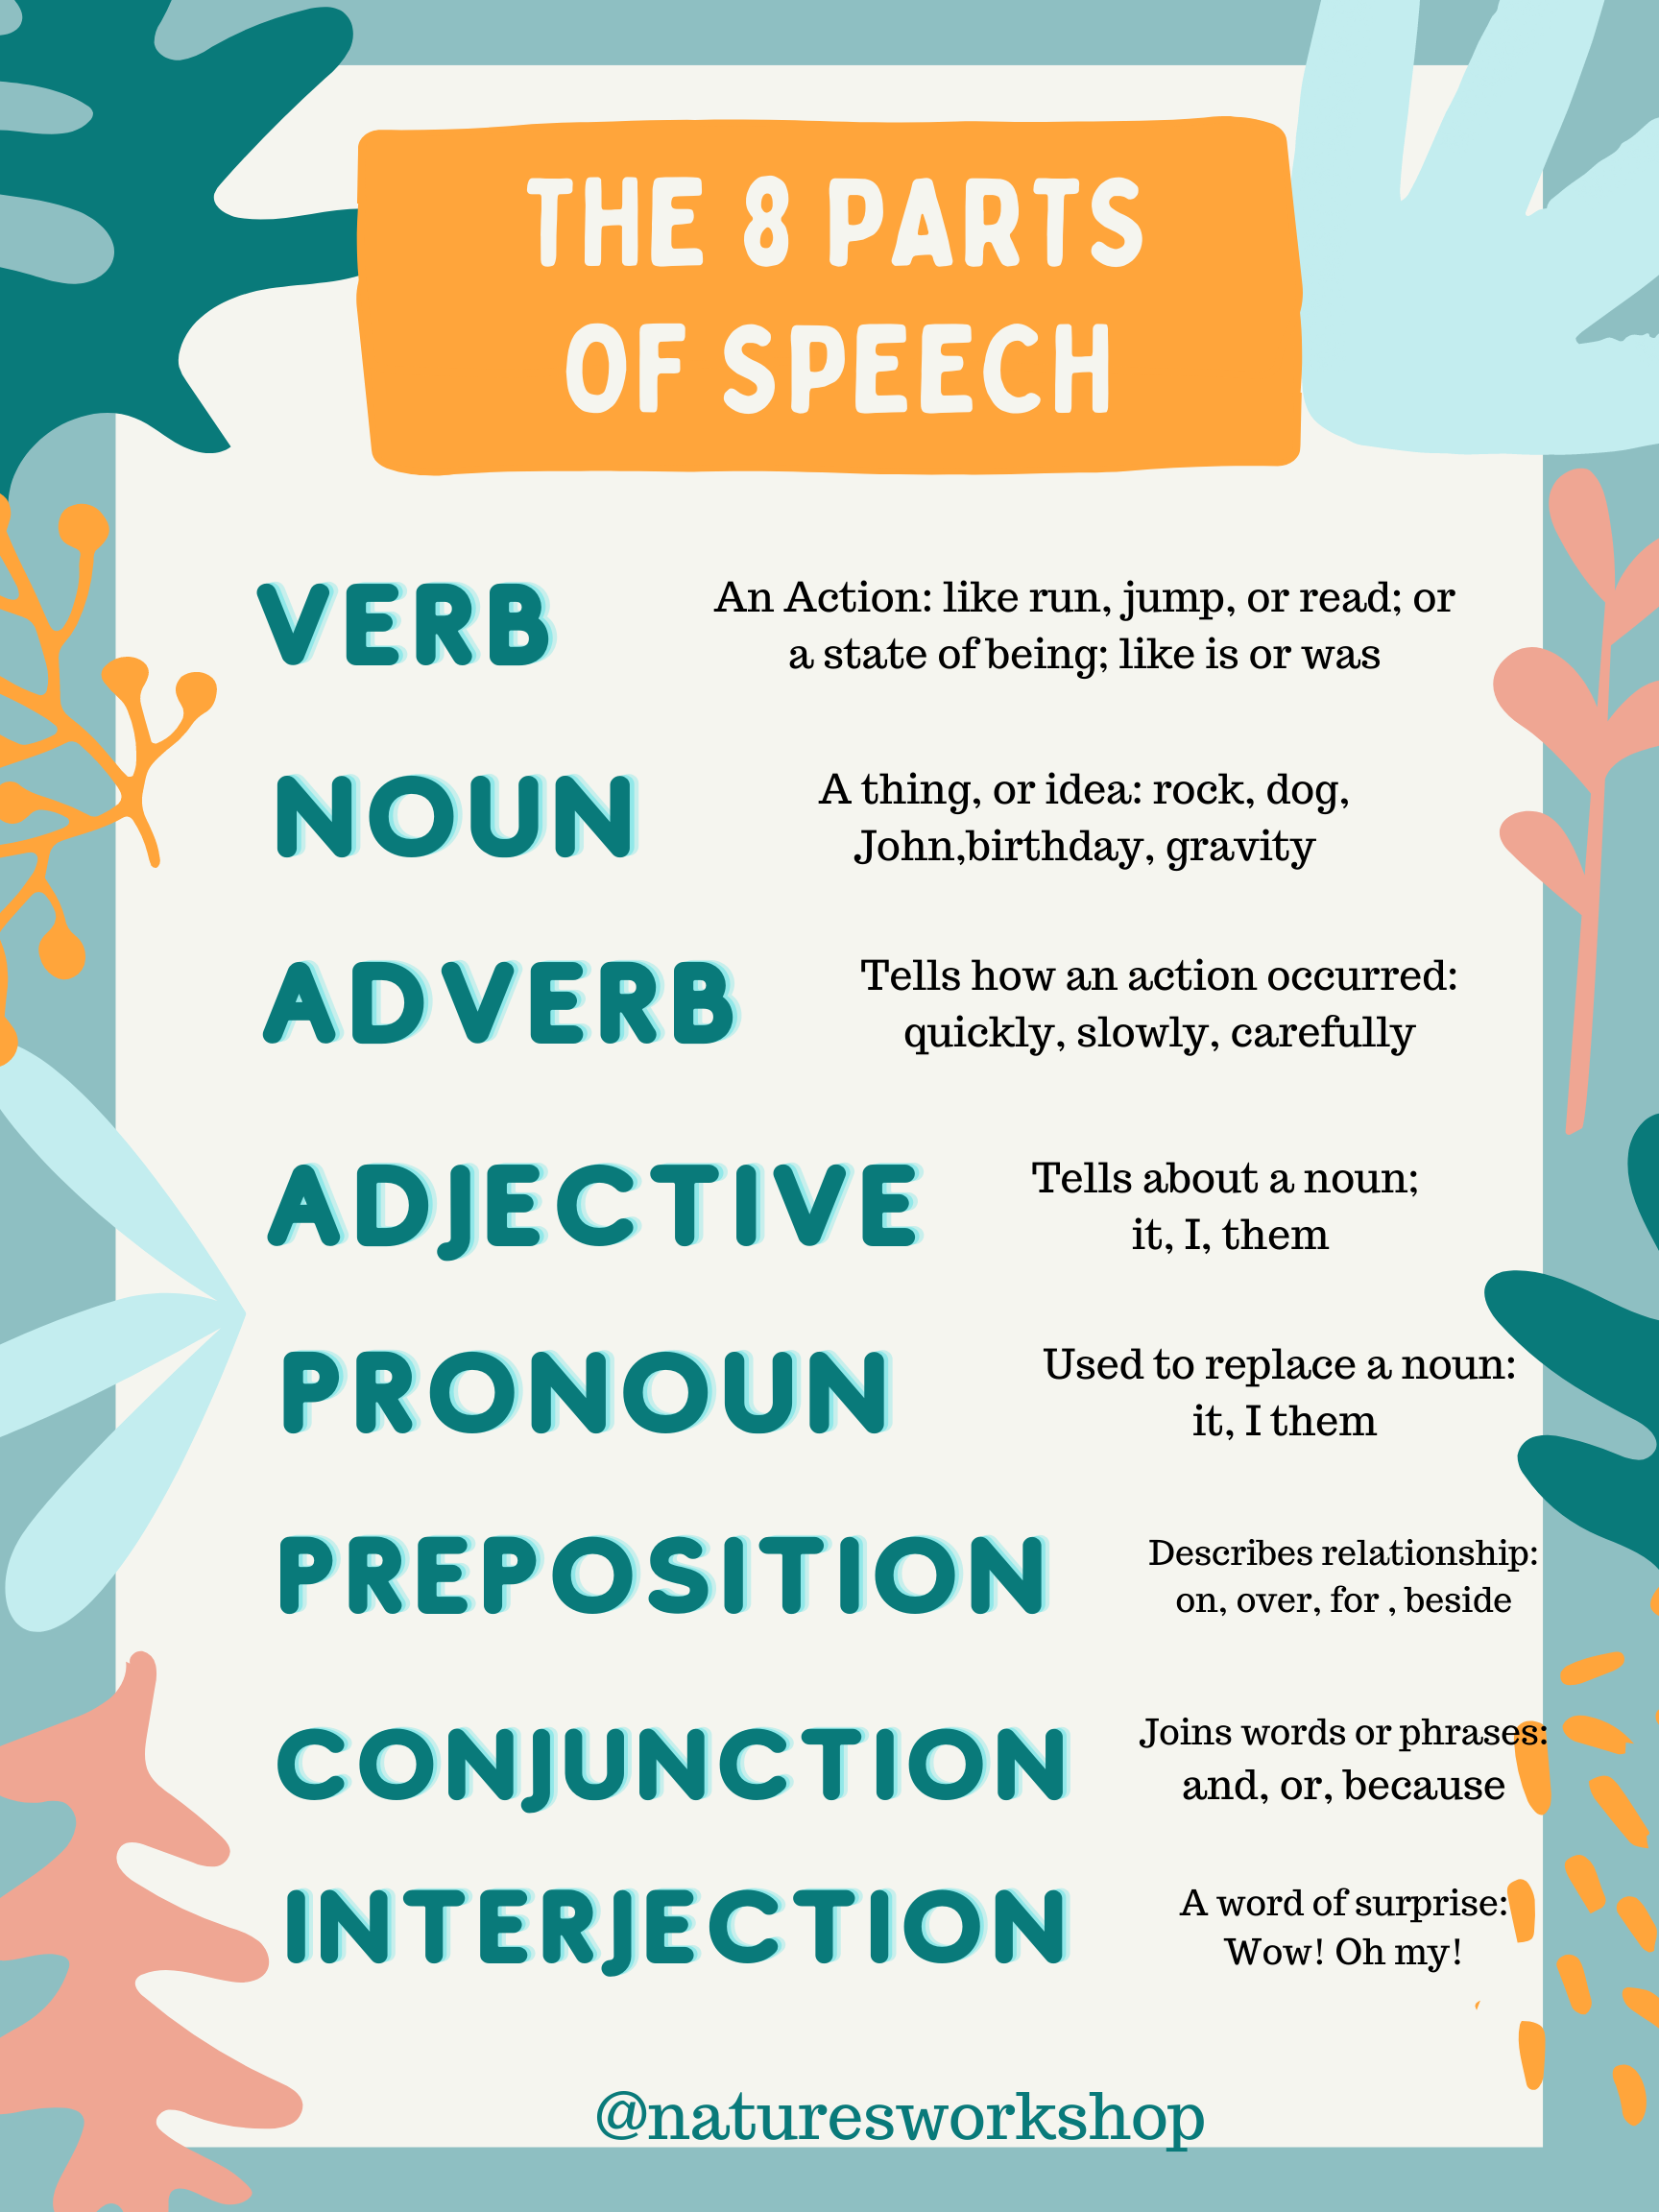 explain the 8 parts of speech